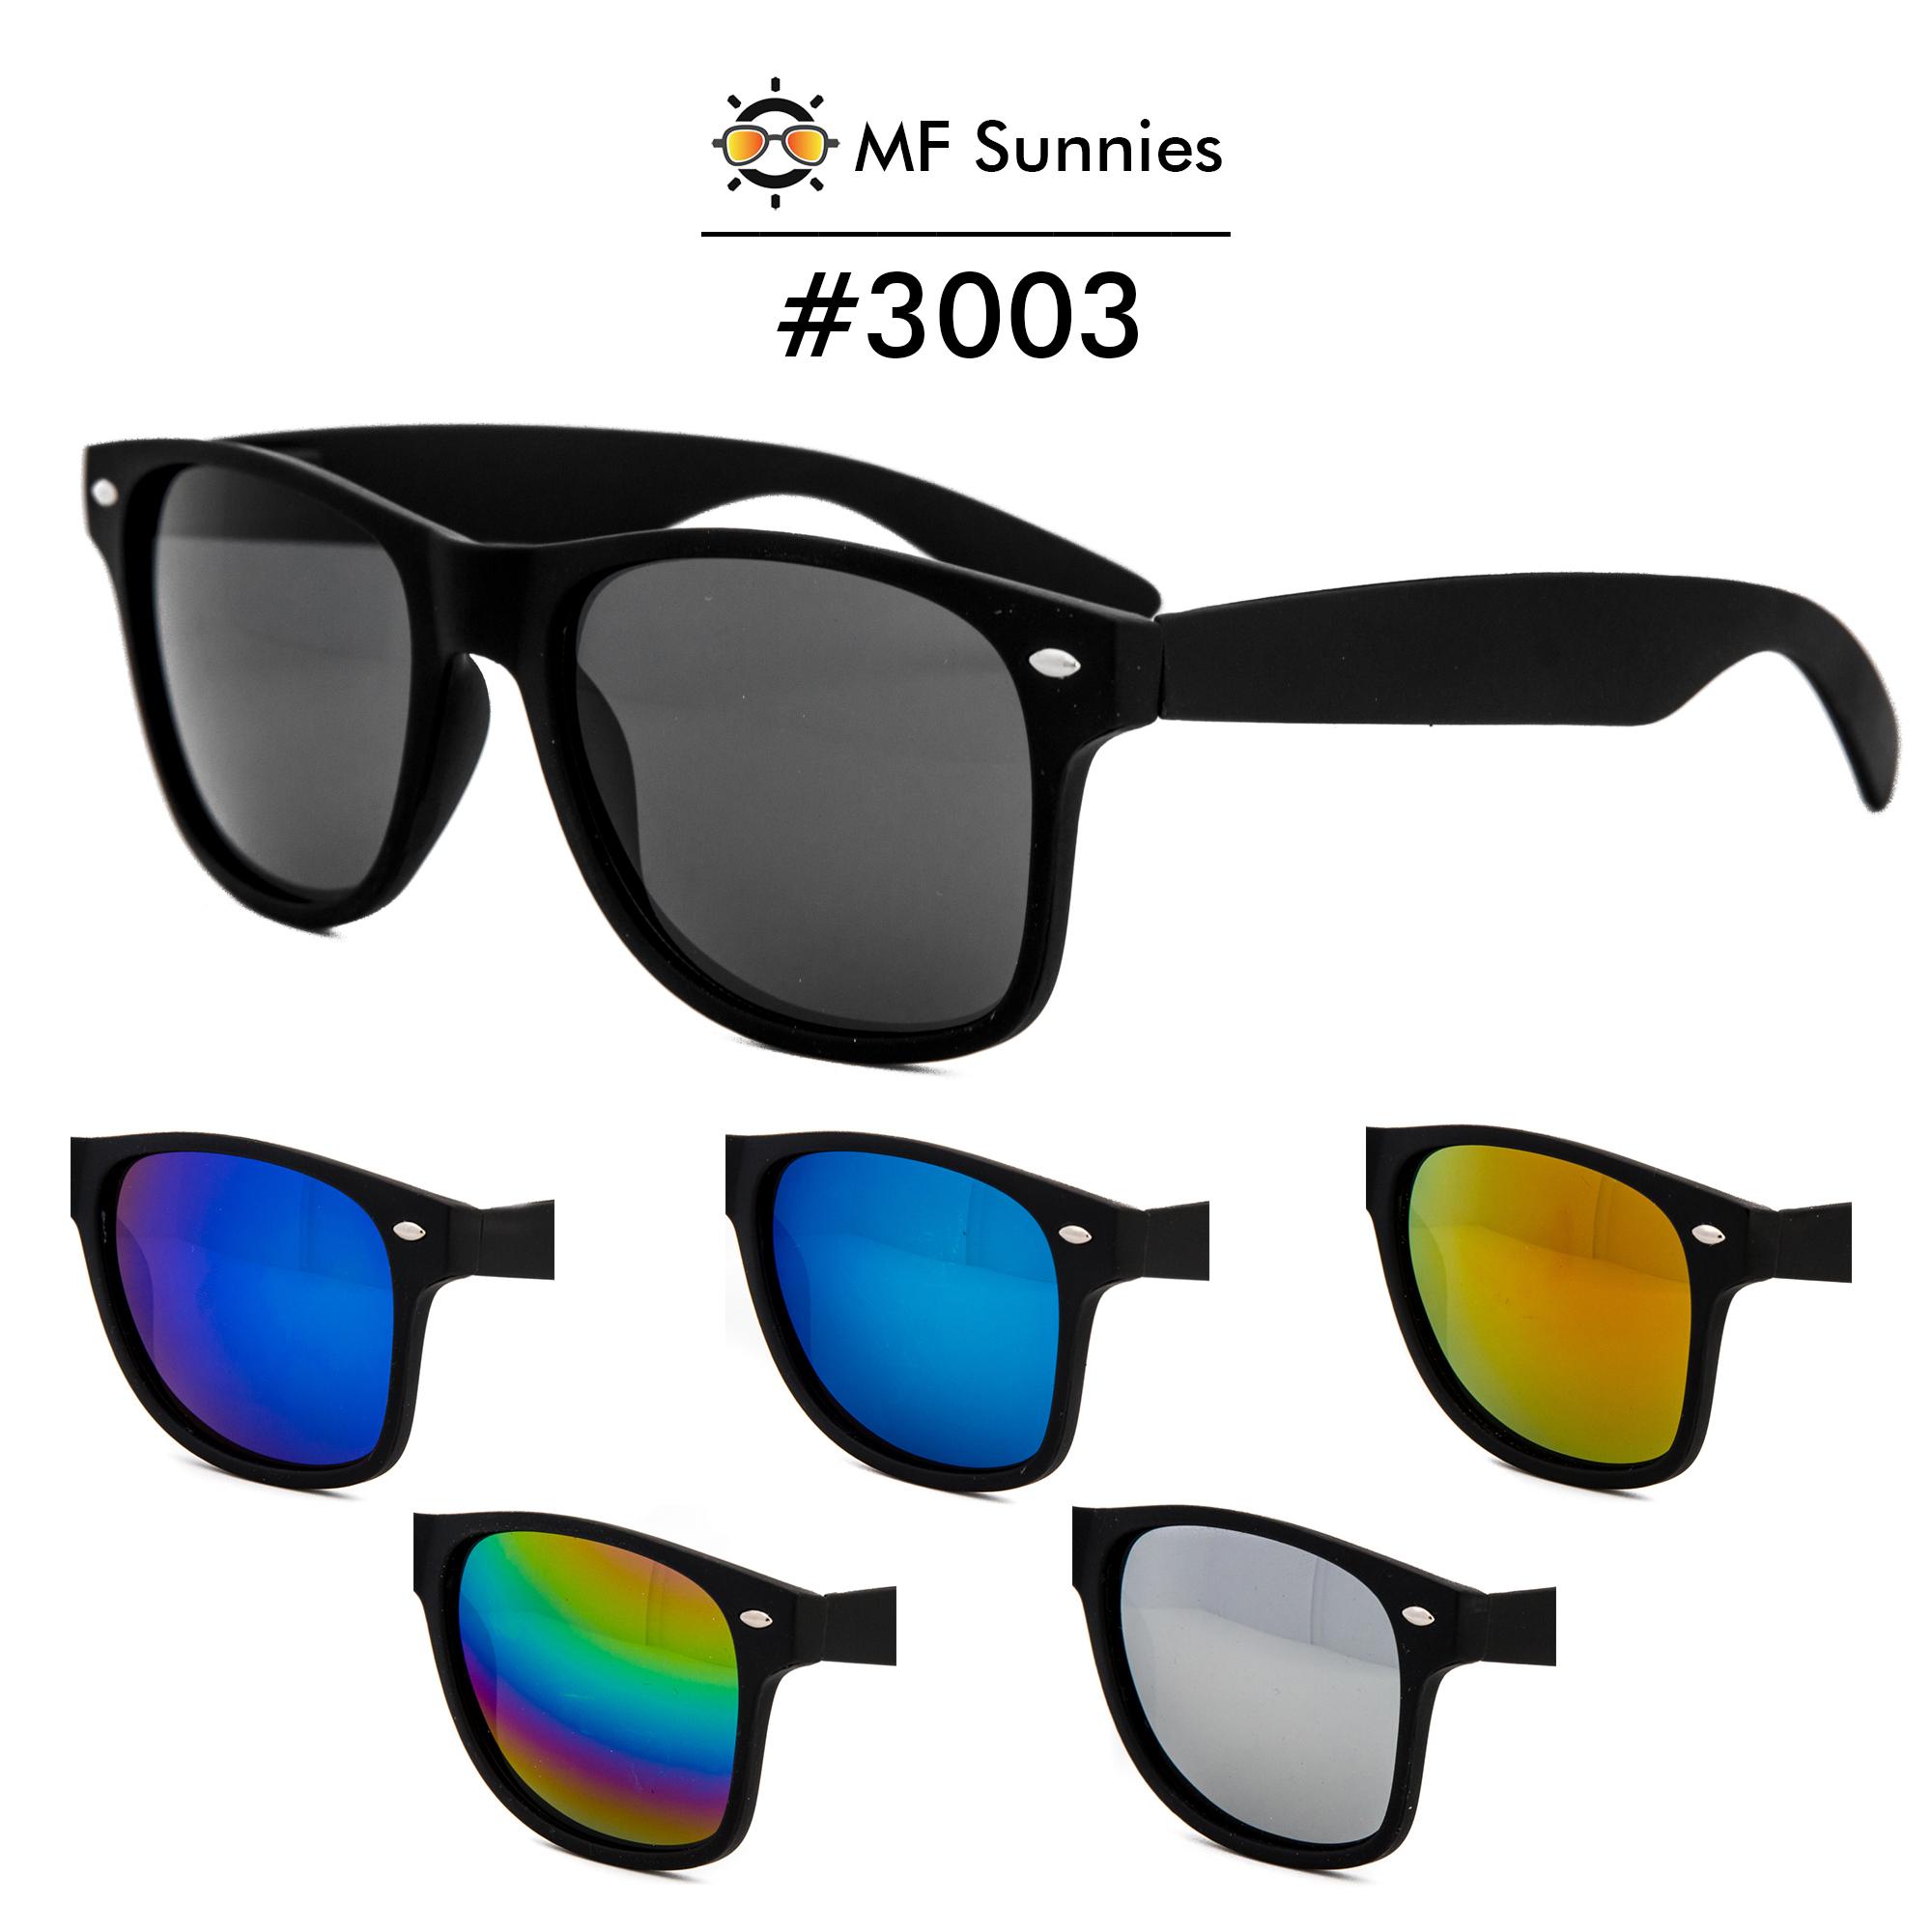 Buy Latest Sunglasses at Best Price 